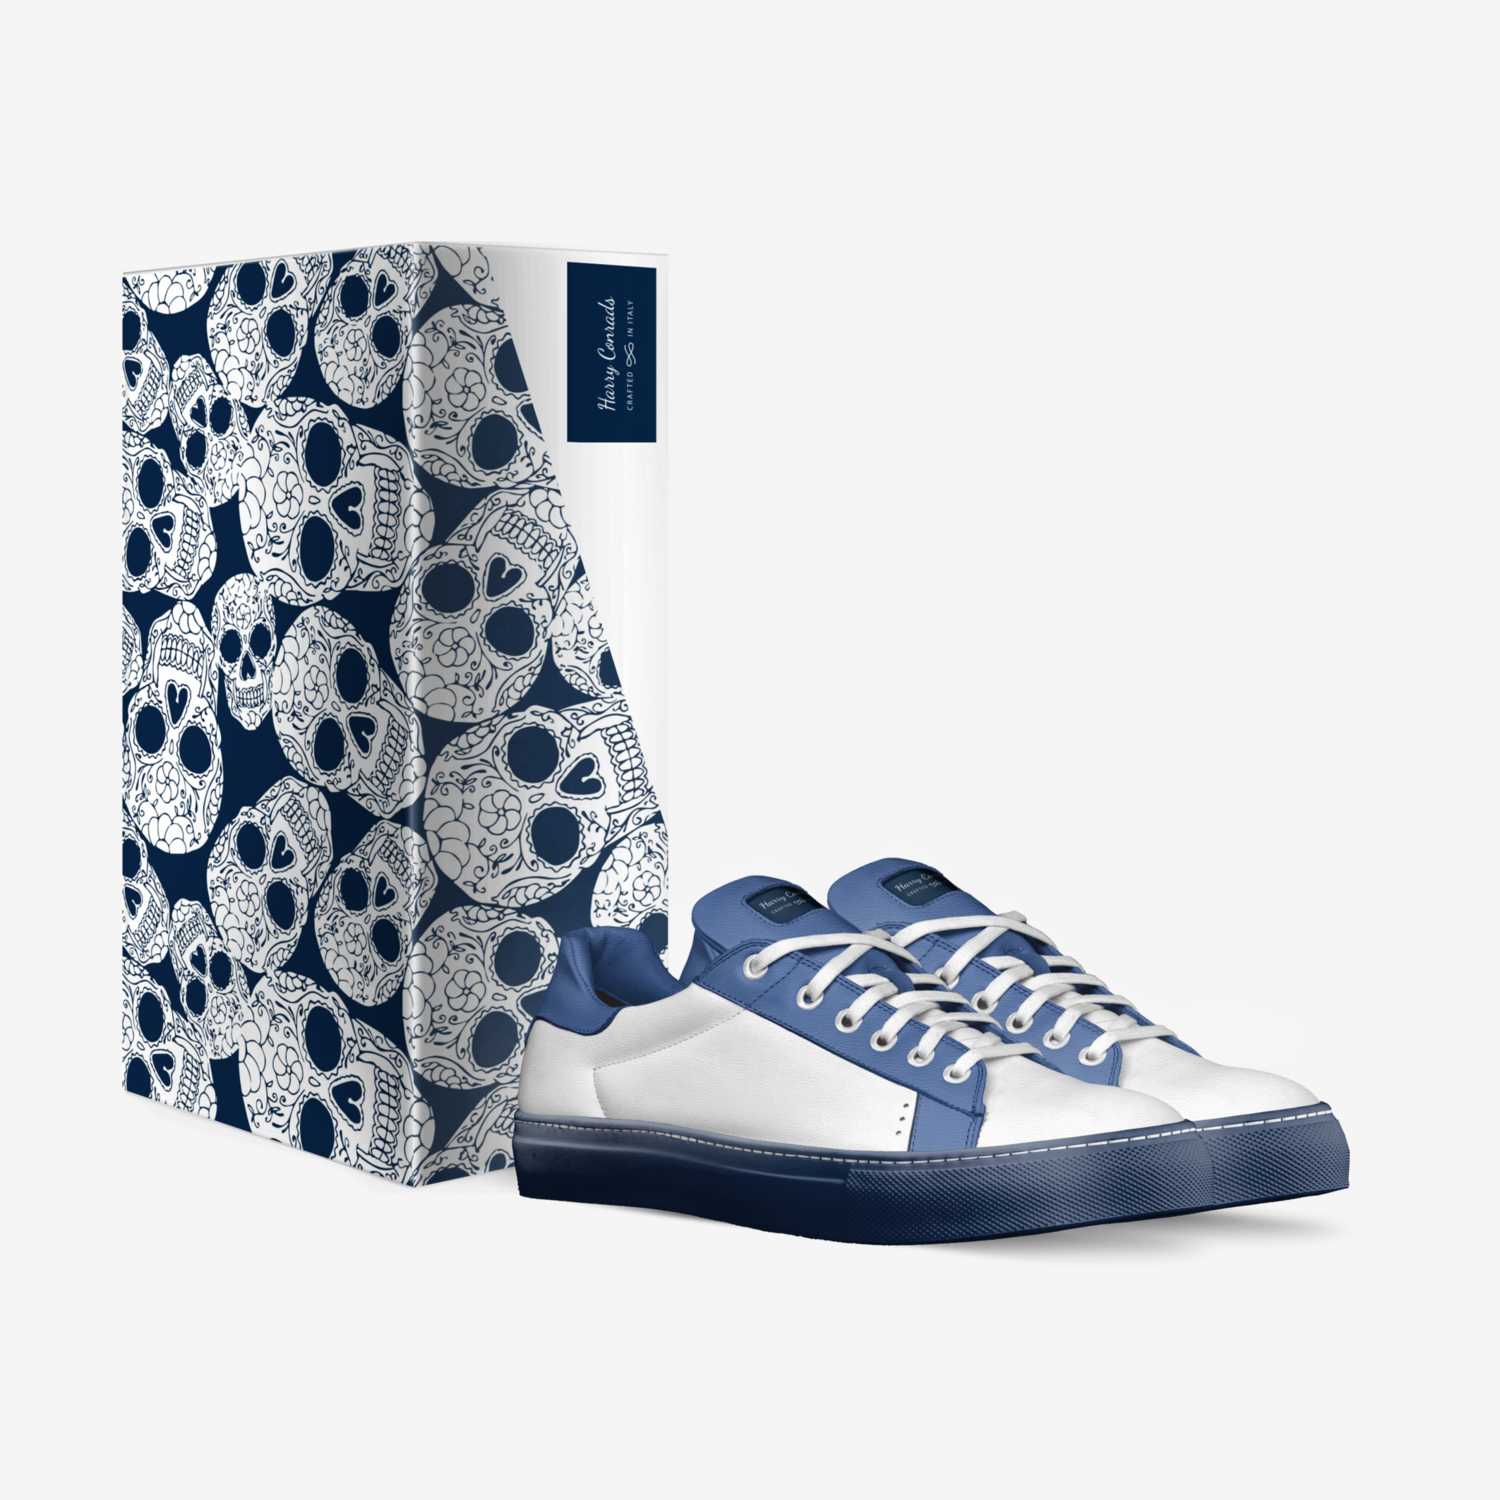 Harry Conrads custom made in Italy shoes by Manoli Farabi | Box view